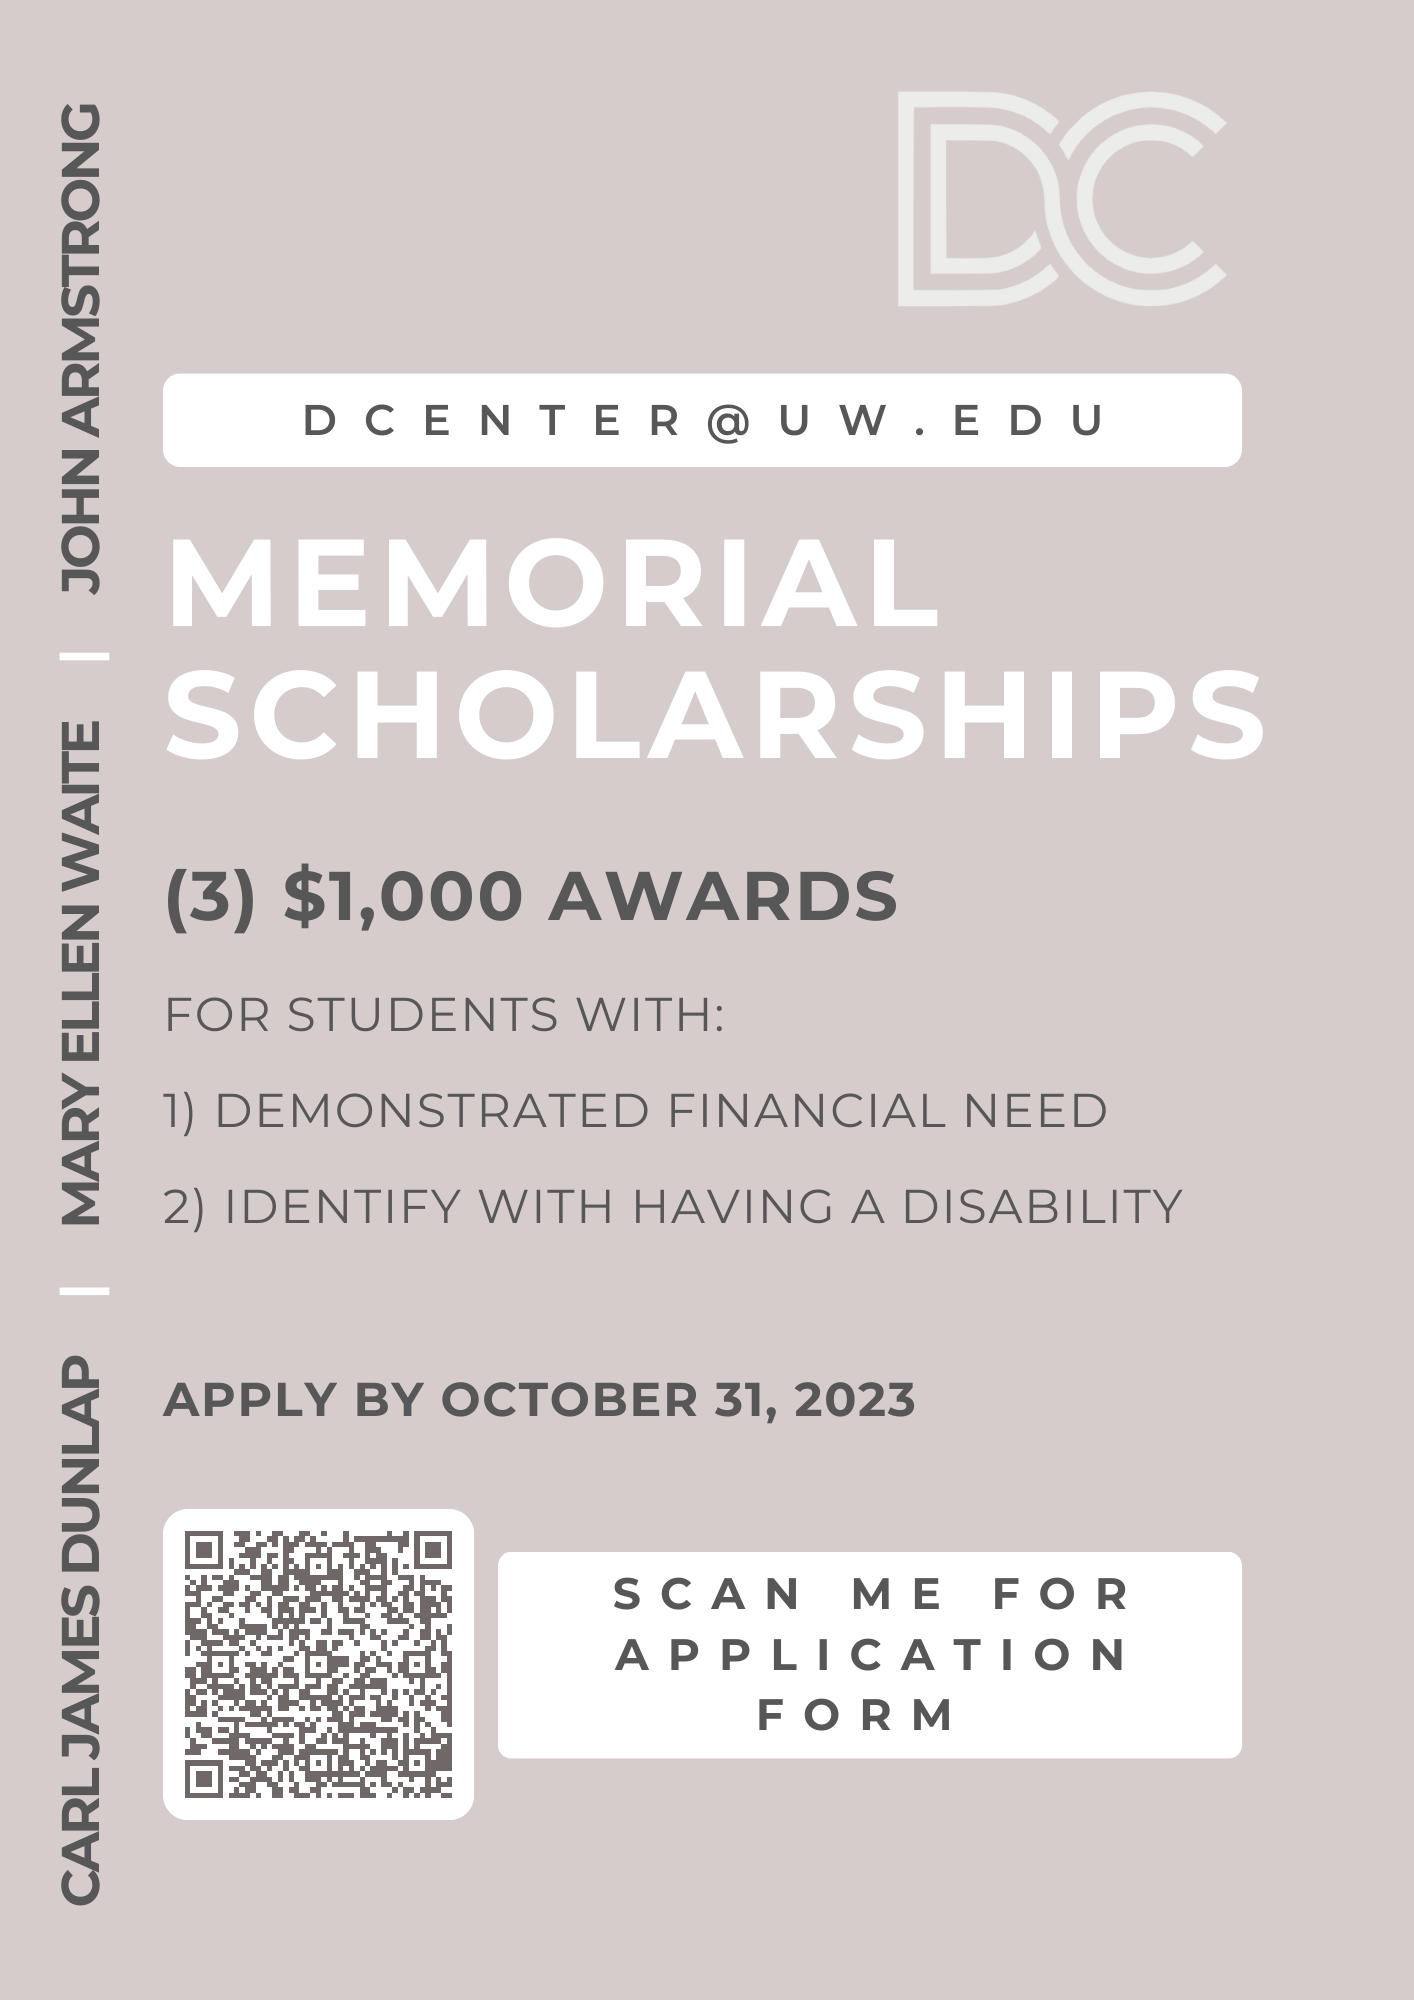 D Center Memorial Scholarship Announcement